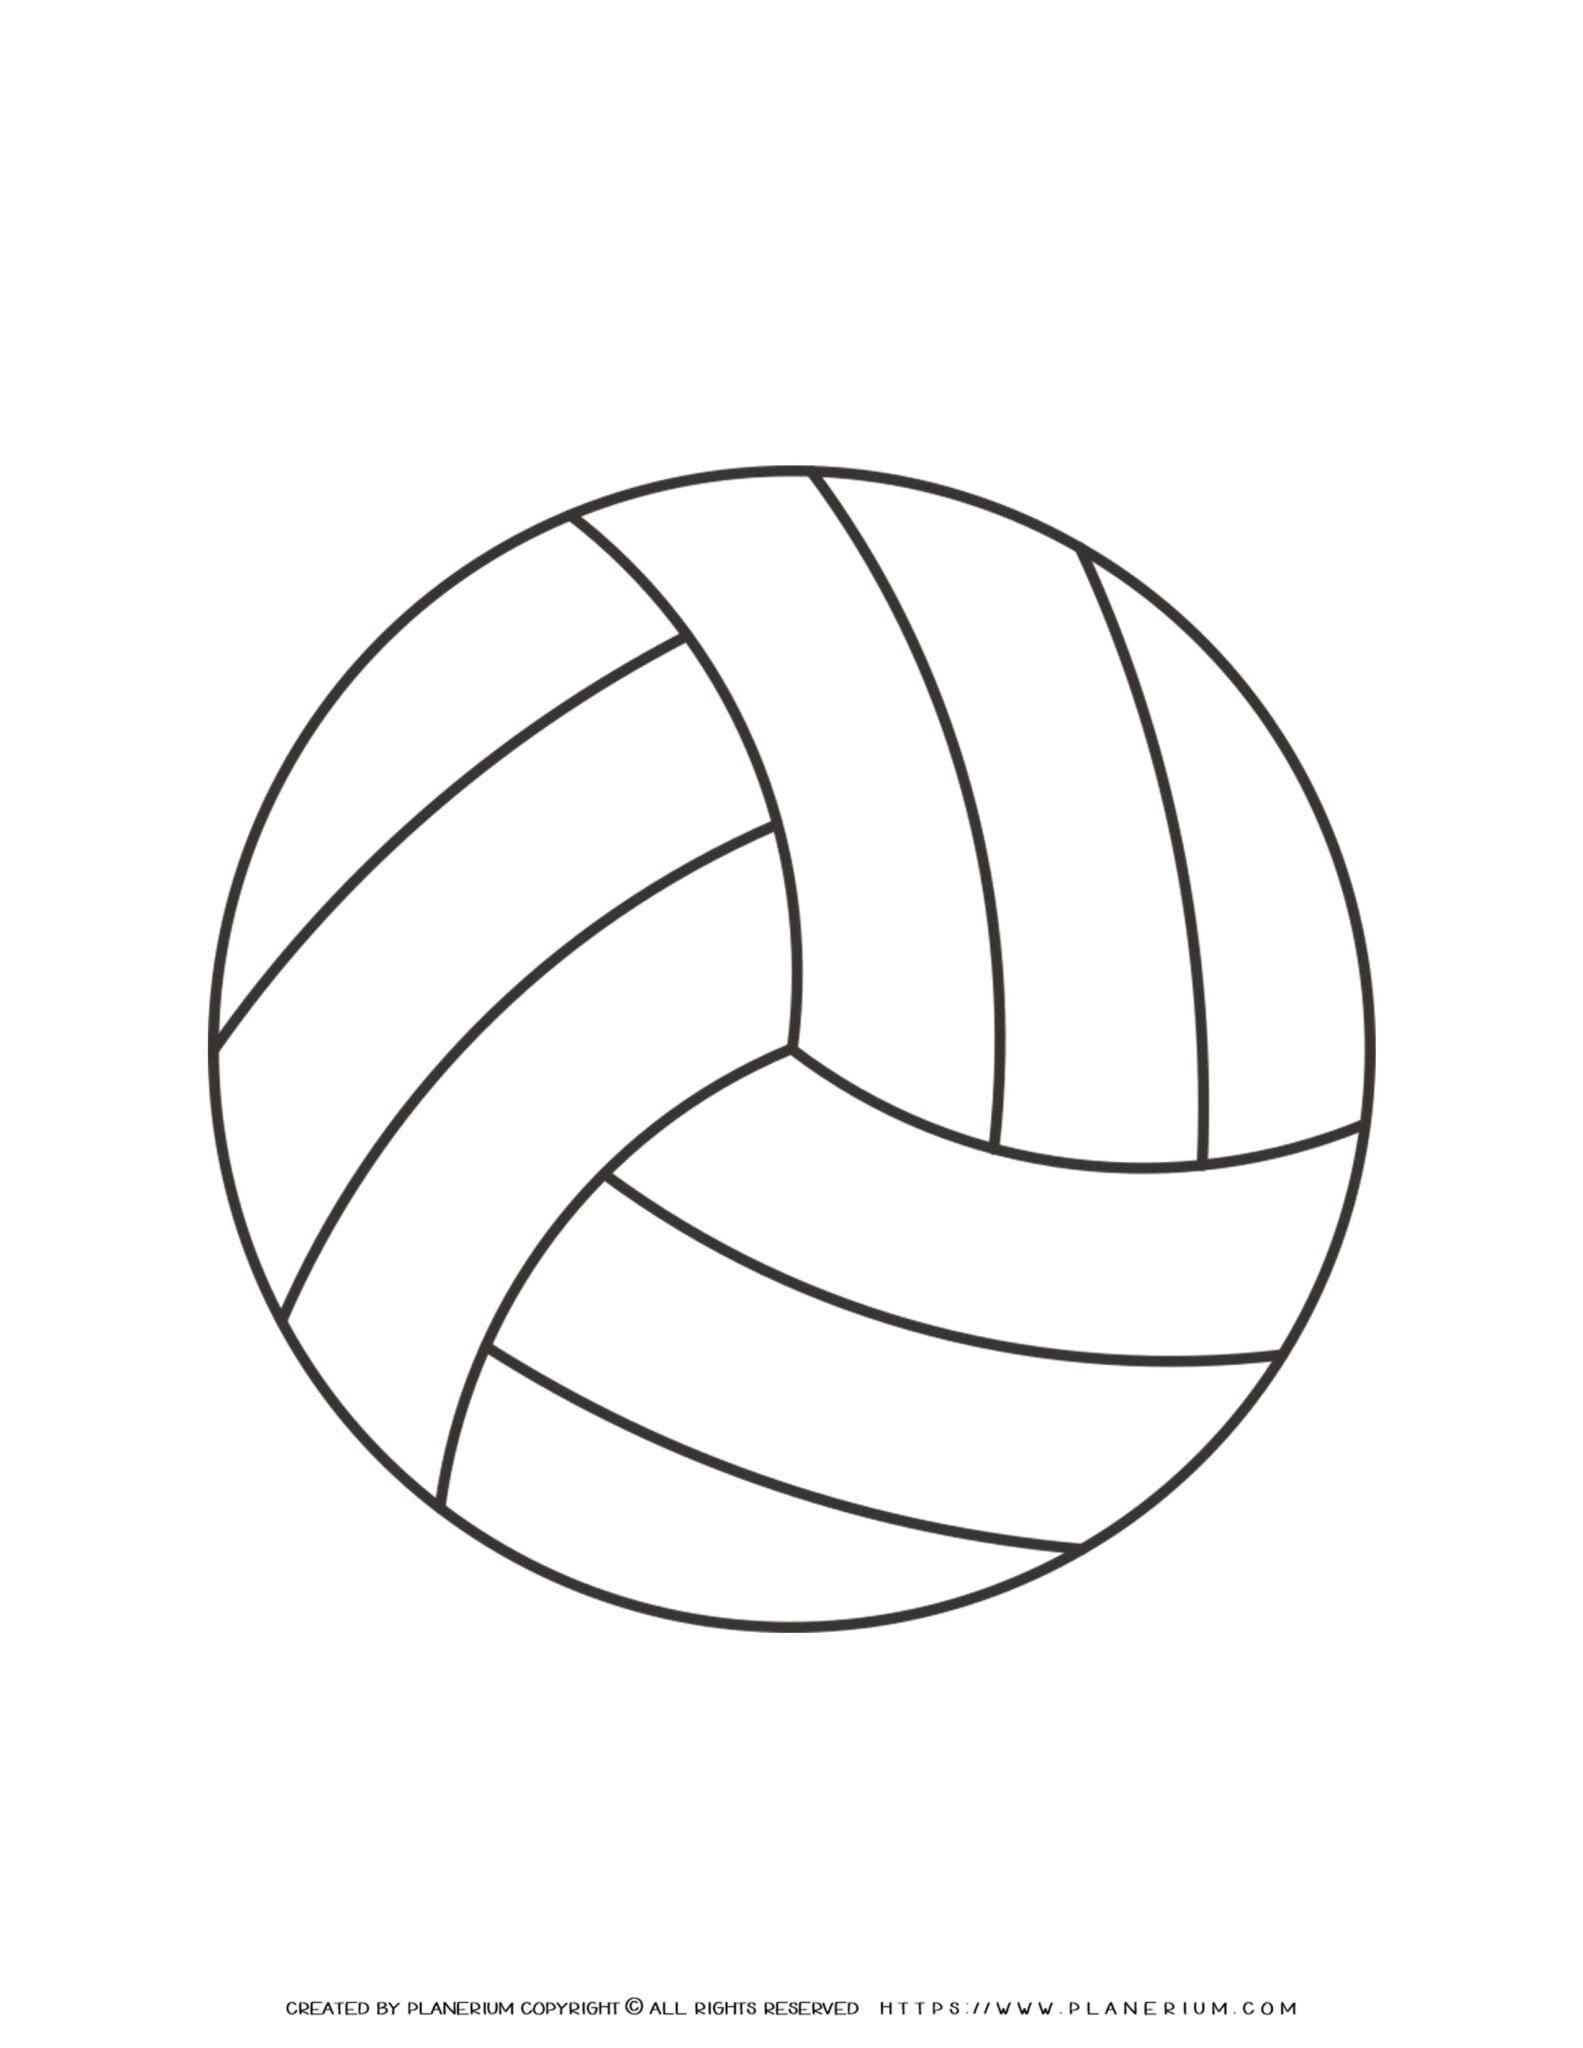 Sport Template - Volleyball | Planerium